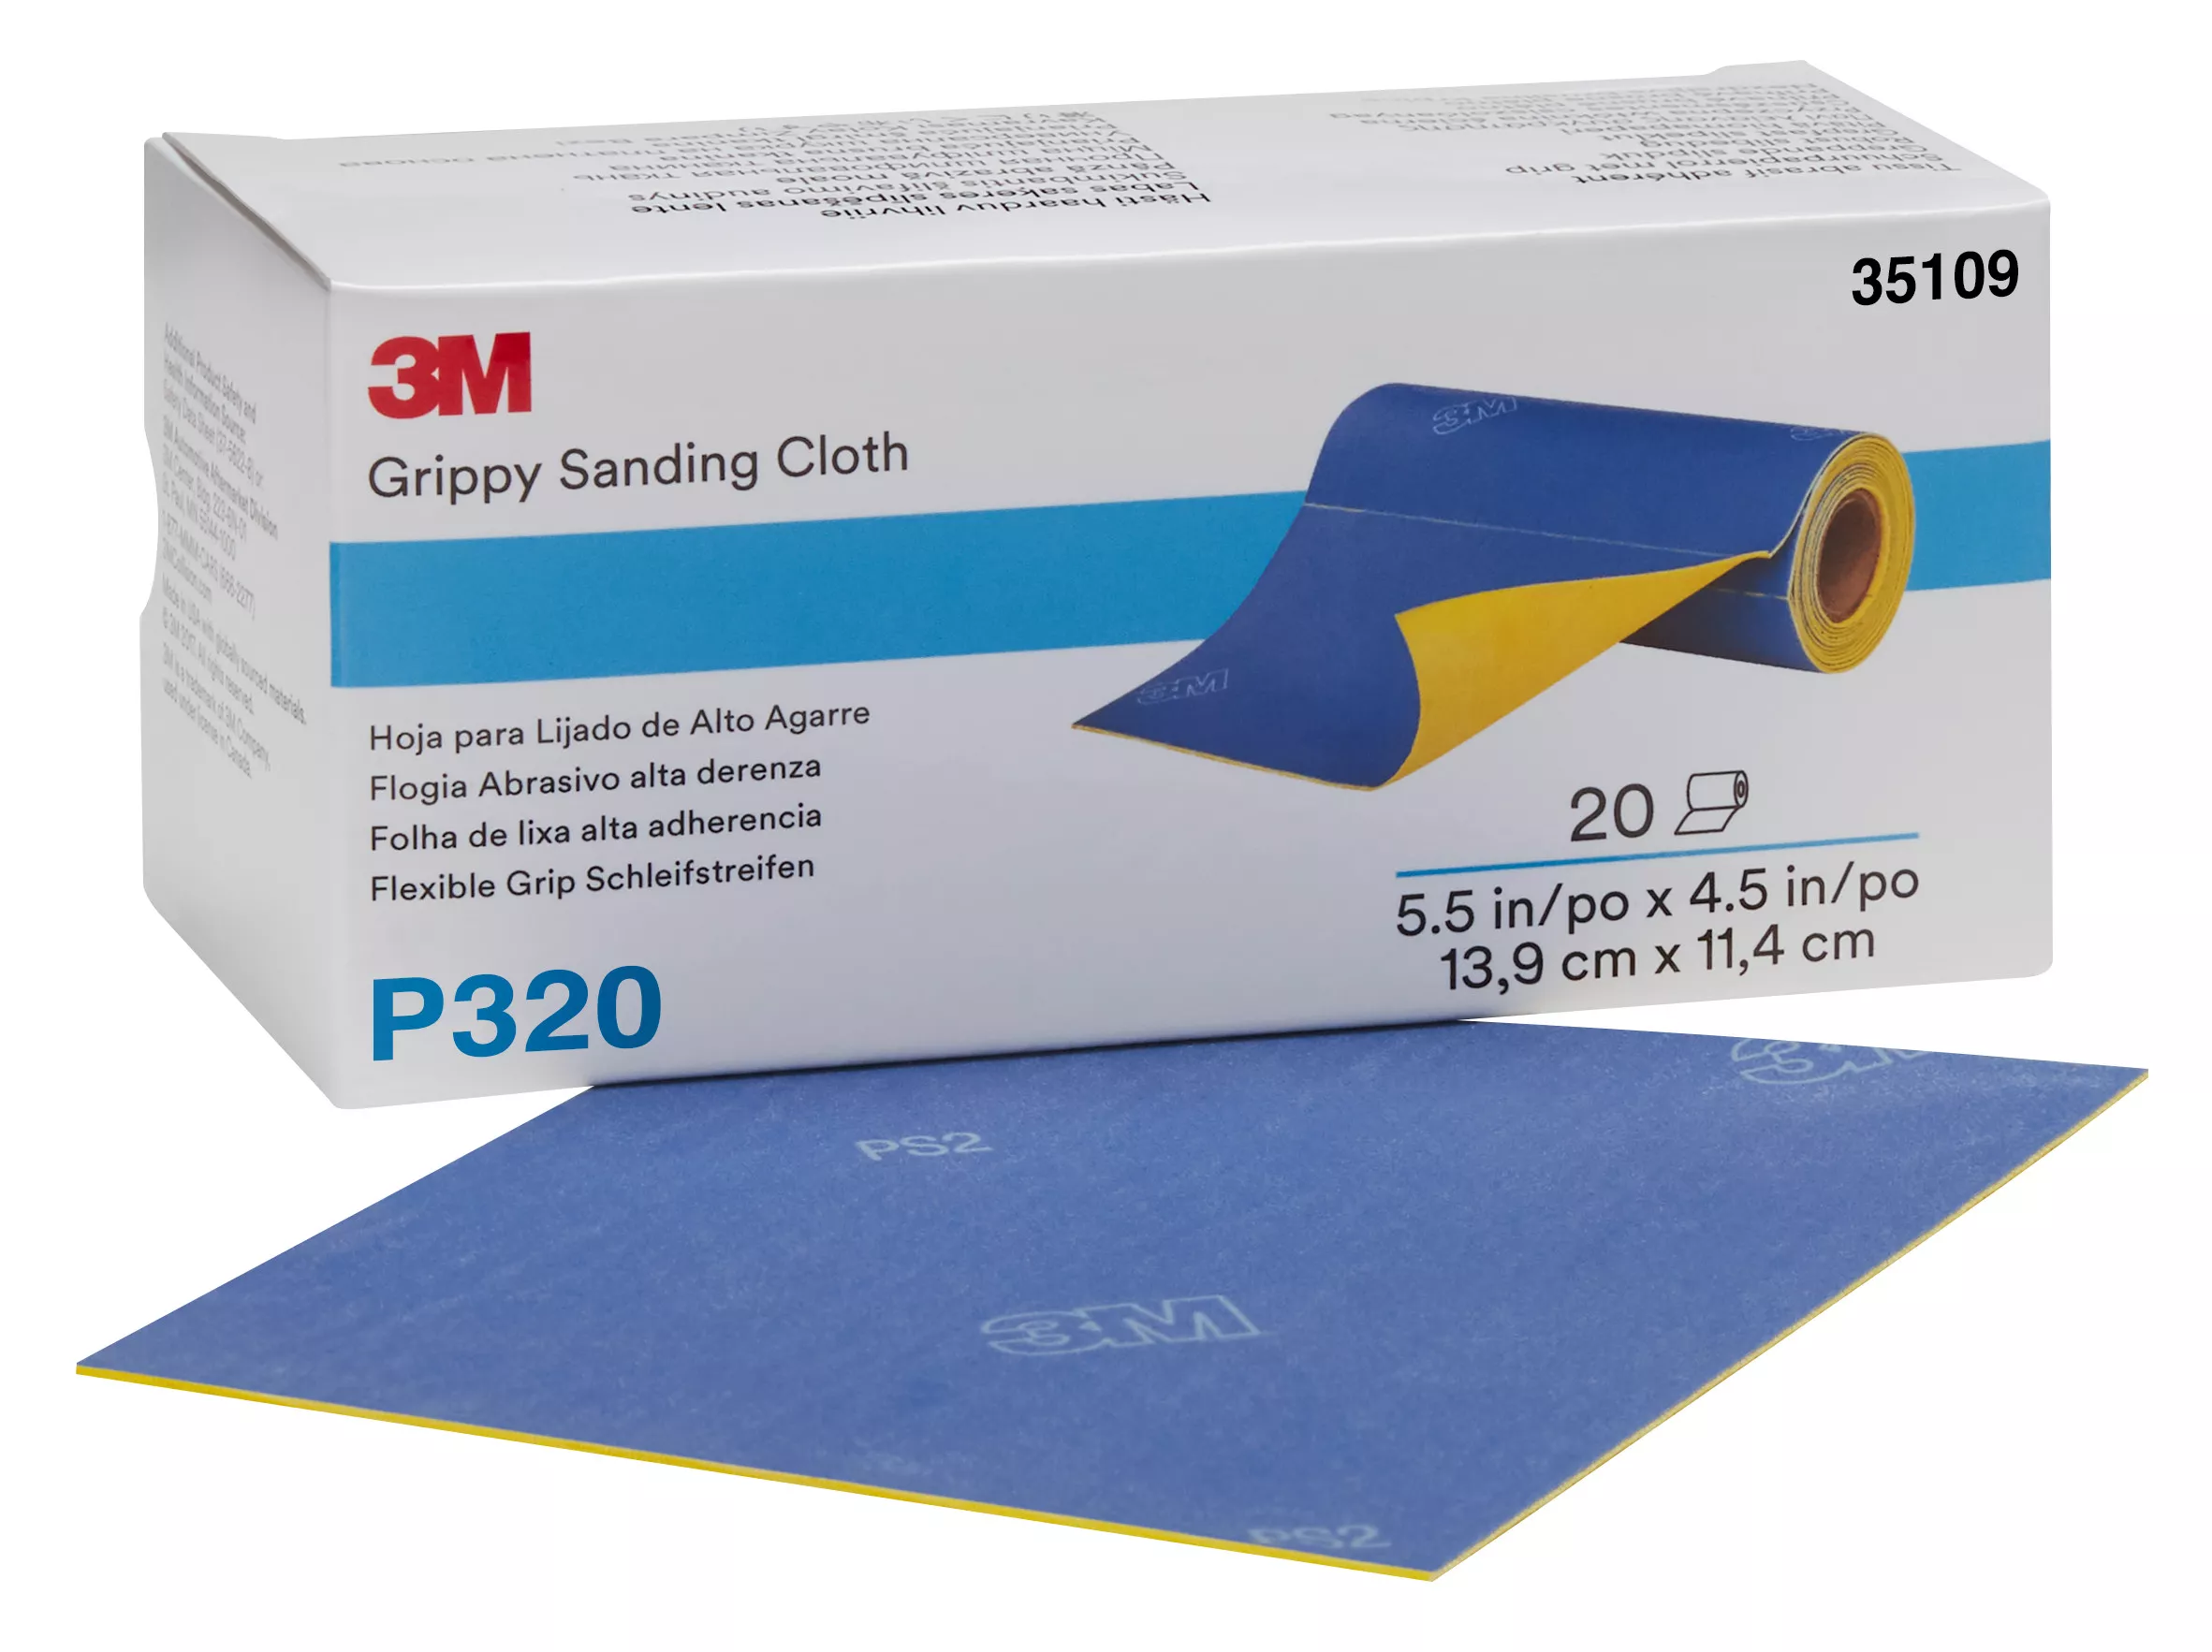 SKU 7100142931 | 3M™ Grippy Sanding Cloth 35109